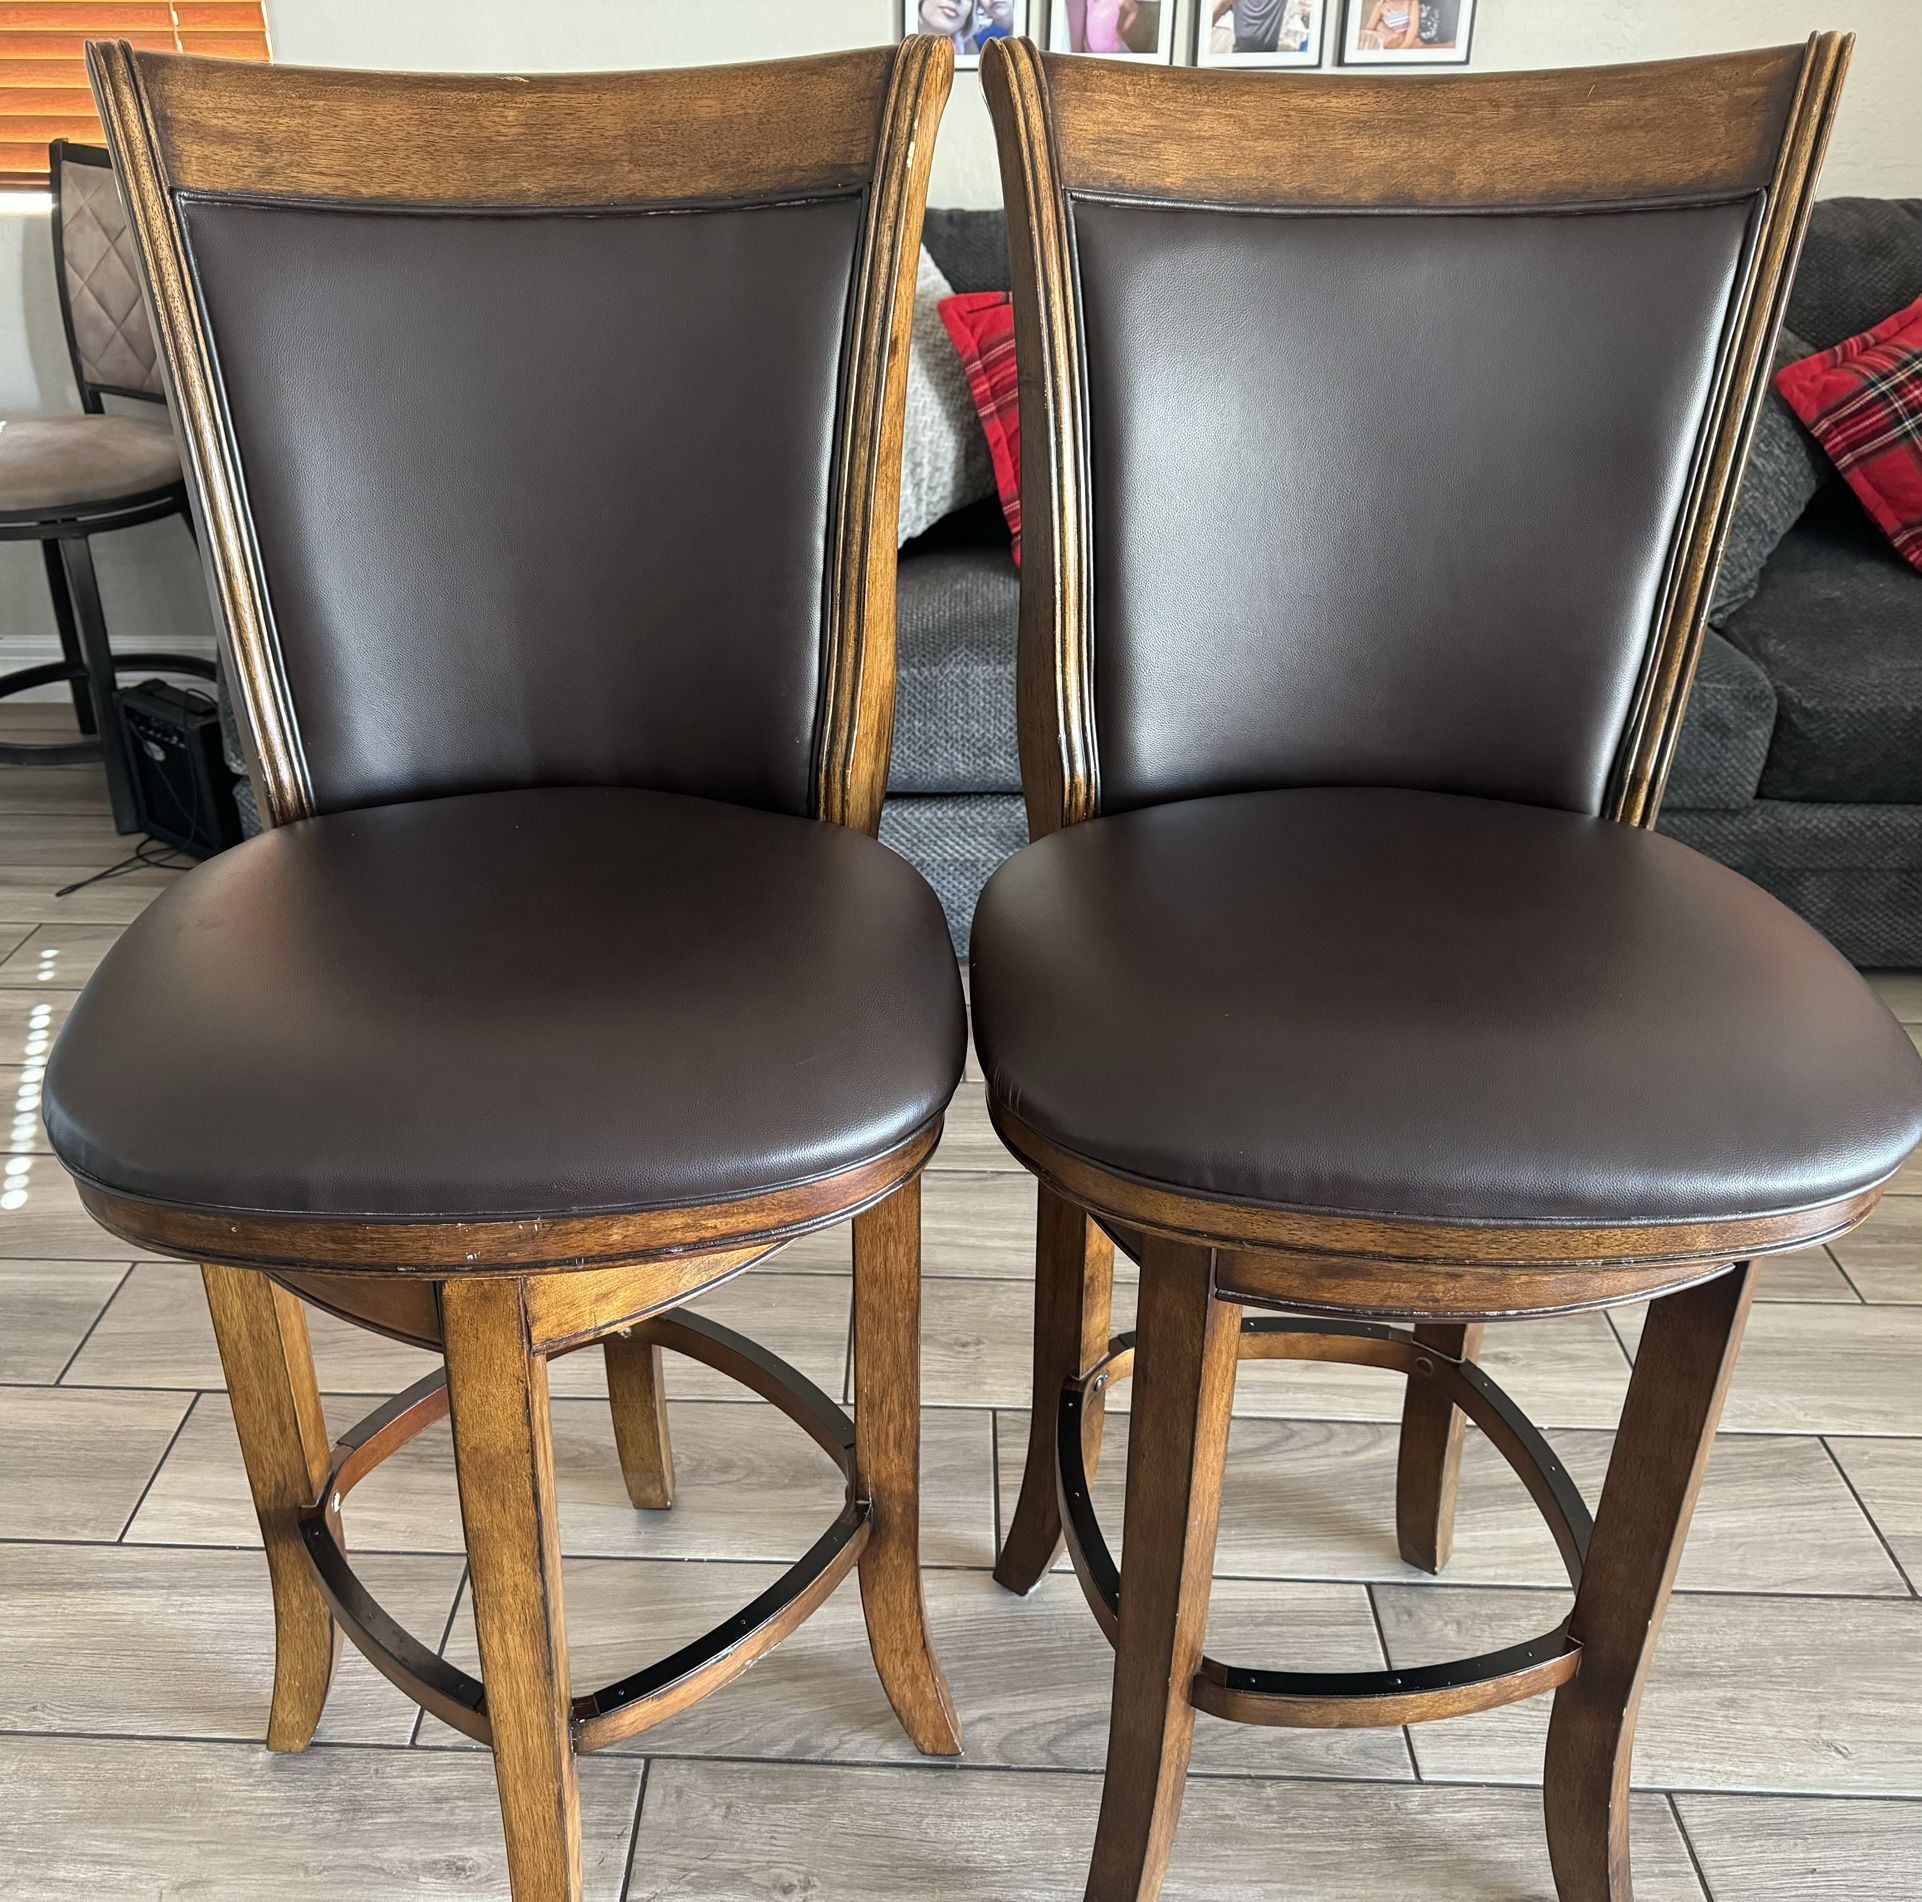 Barstools/High Chairs